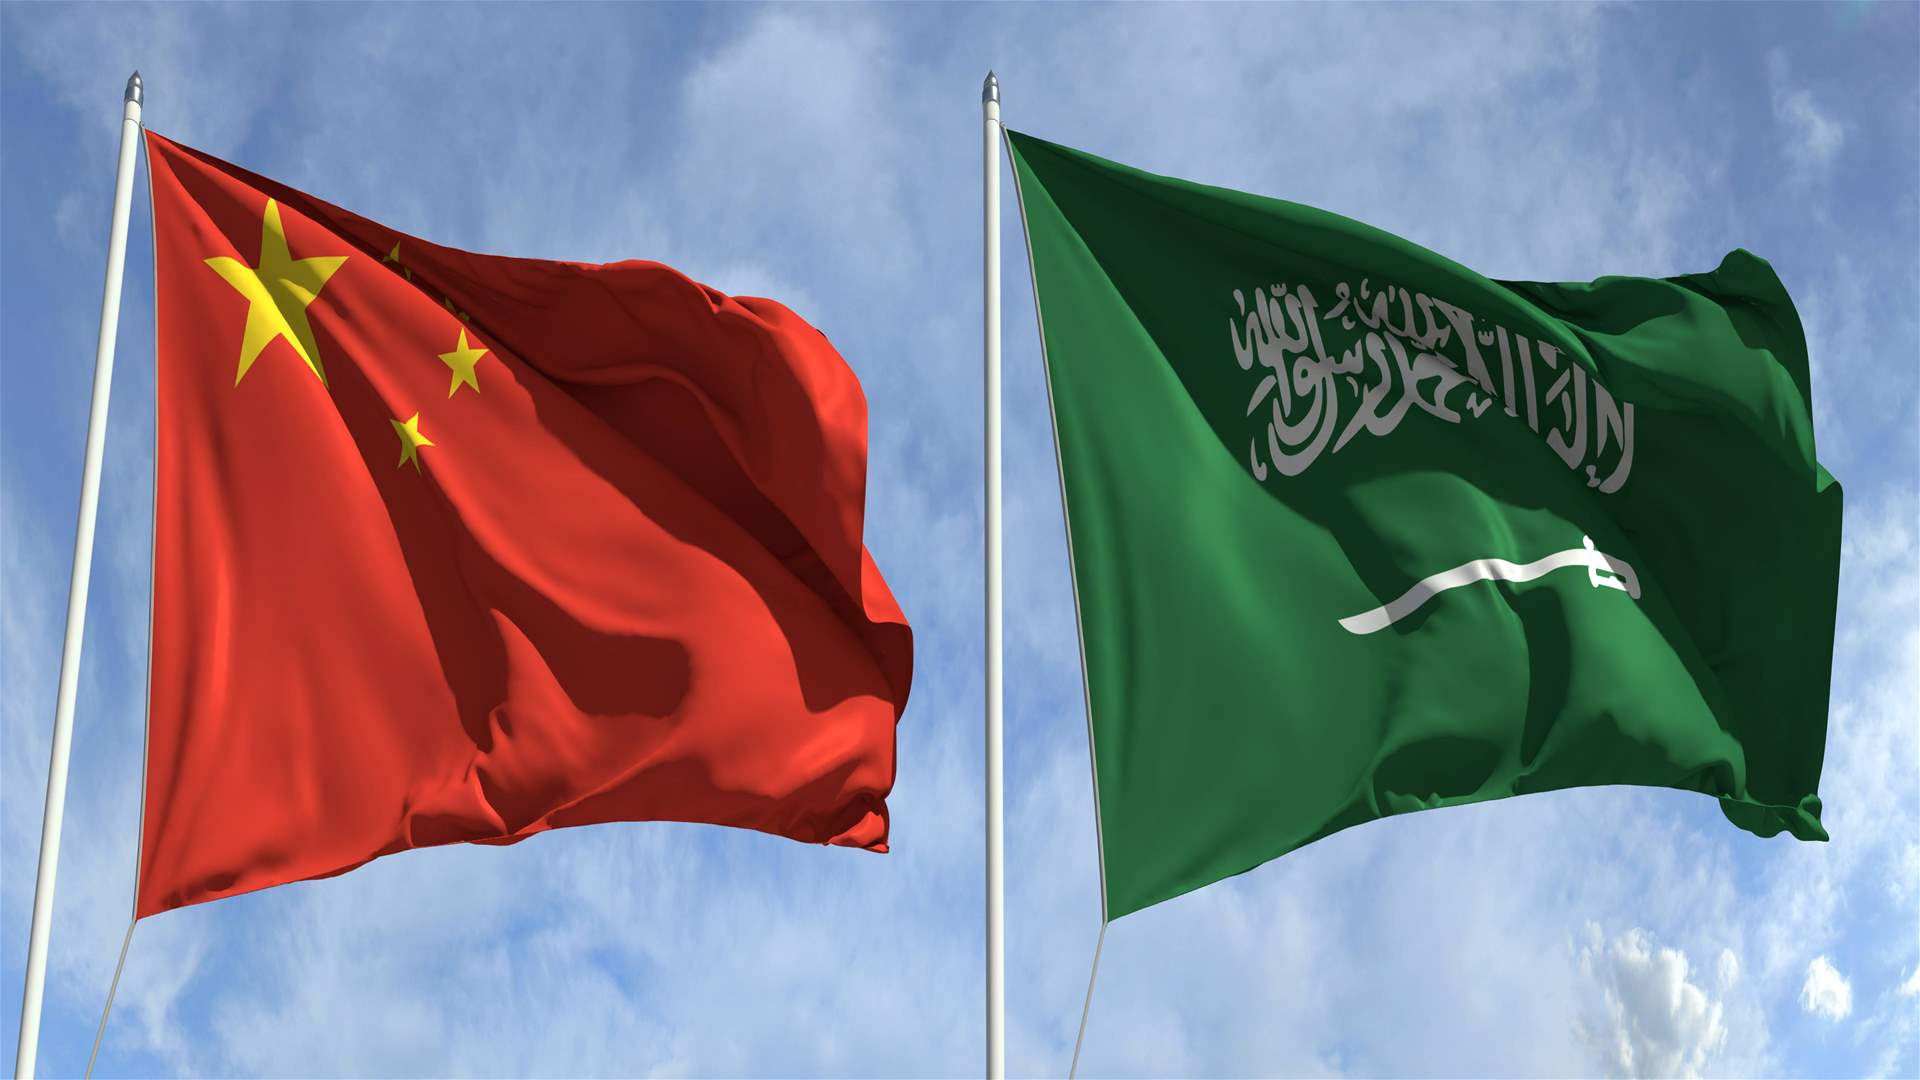 China and Saudi Arabia foreign ministers discuss Ukraine crisis